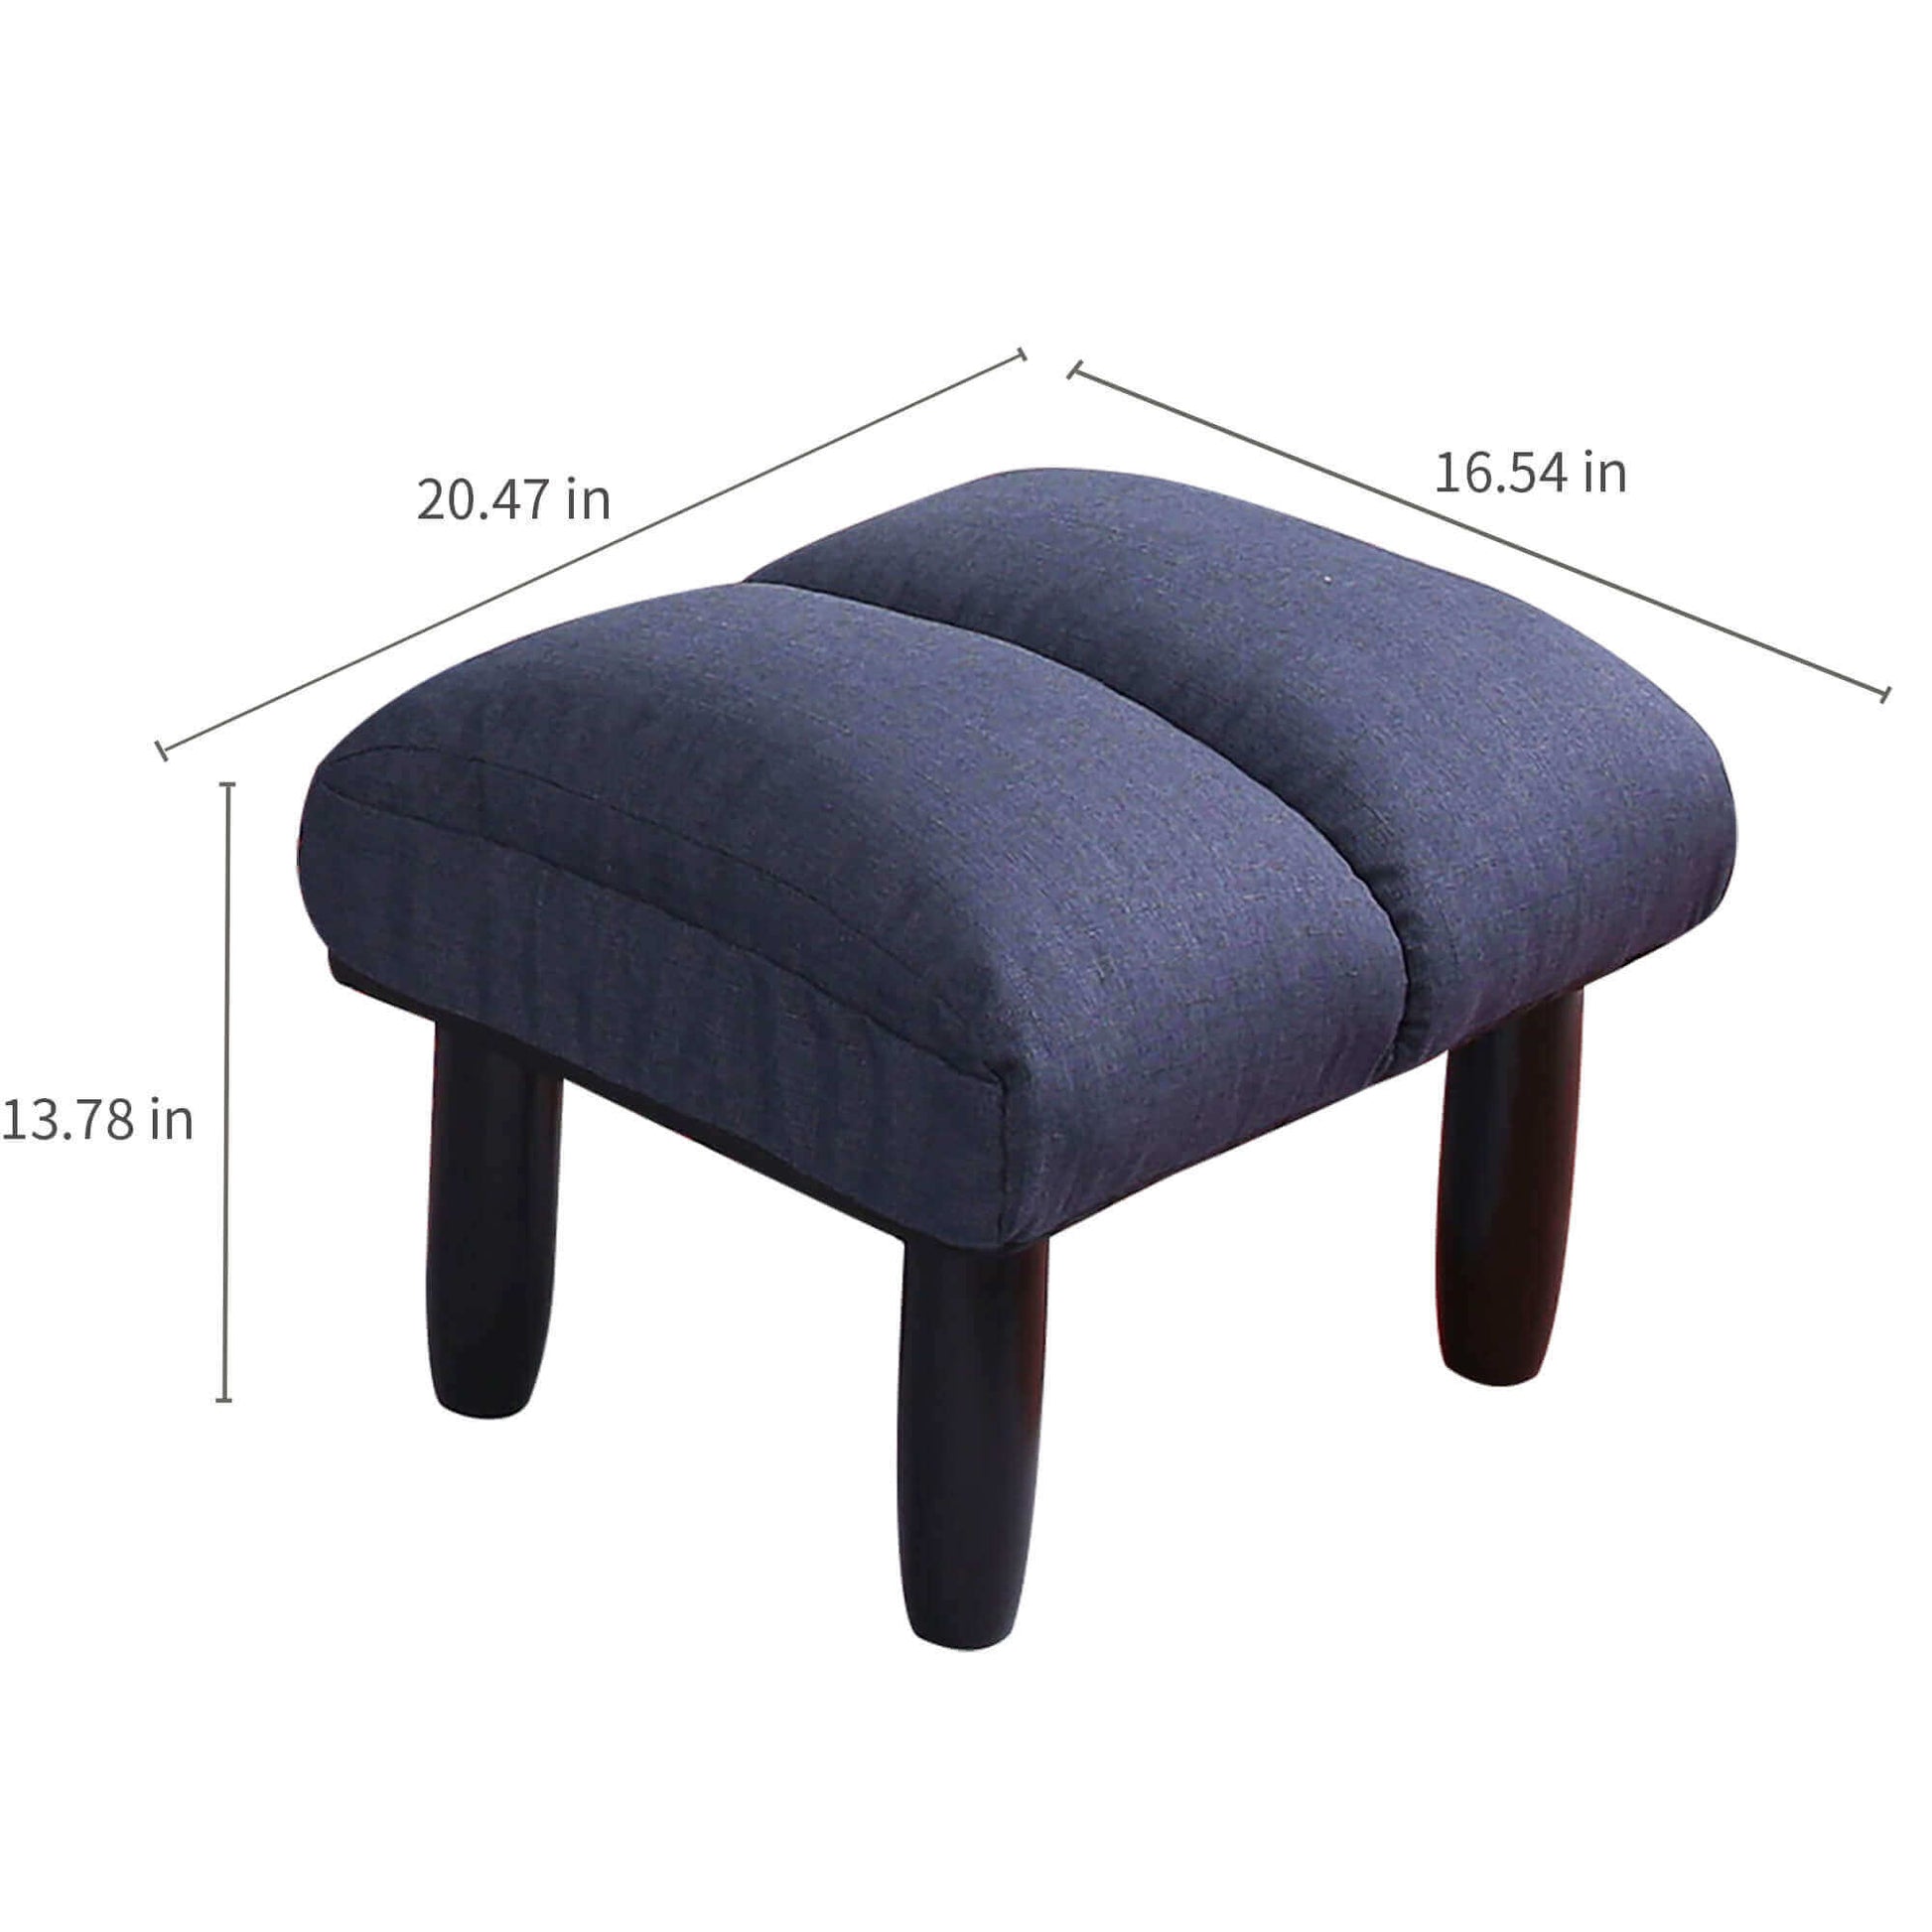 Arttoreal 360-Degree Swivel Floor Chair Reclining Chair/Folding Chair Single Lazy Sofa Tatami Adjustable Chair for Balcony Bedroom Living Room